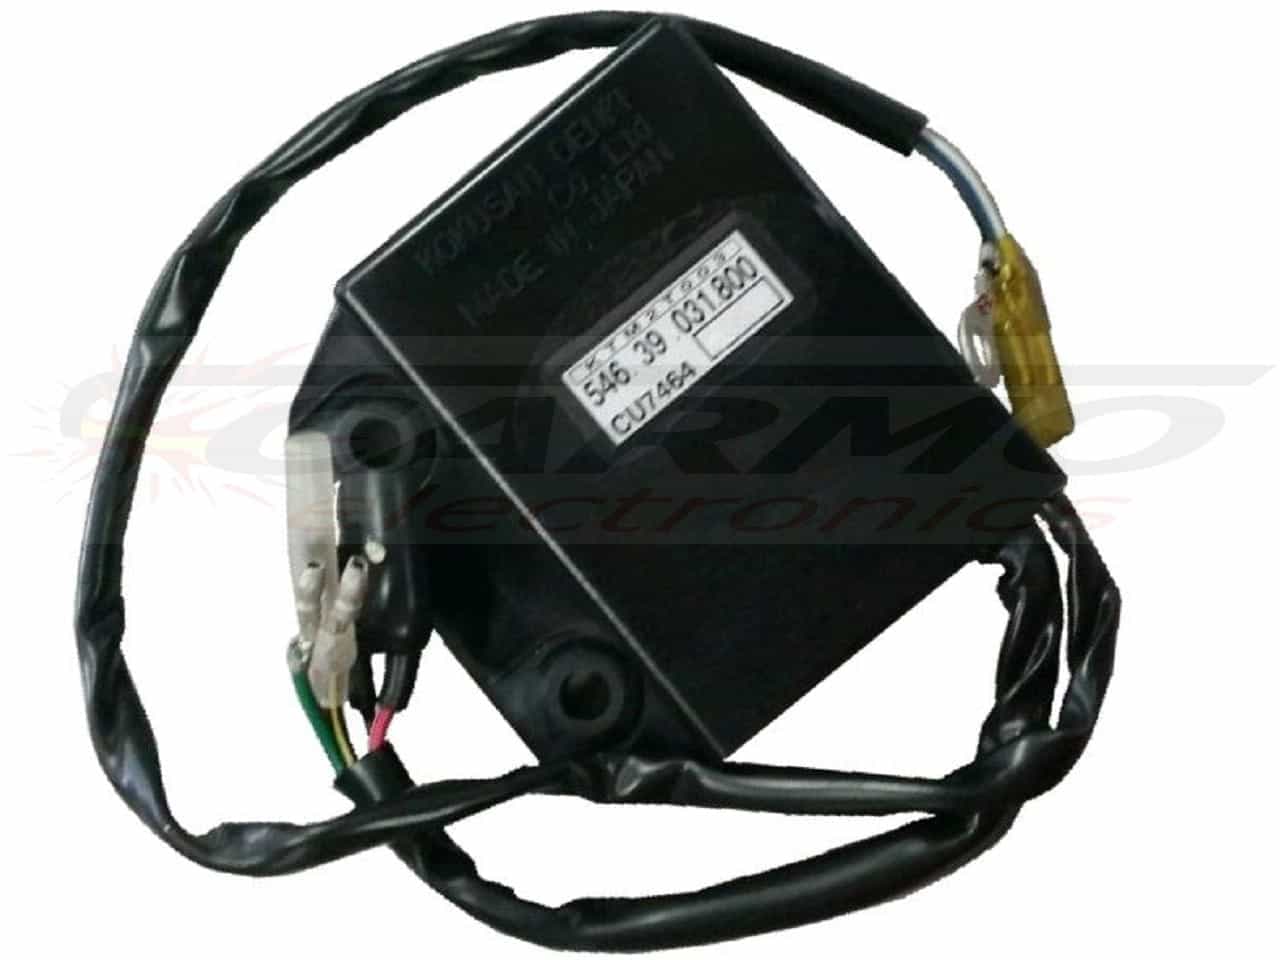 SX250 300 360 380 EXC MXC SX dispositif de commande boîte noire (CU7464, CU7423, CU7417, CU7443)